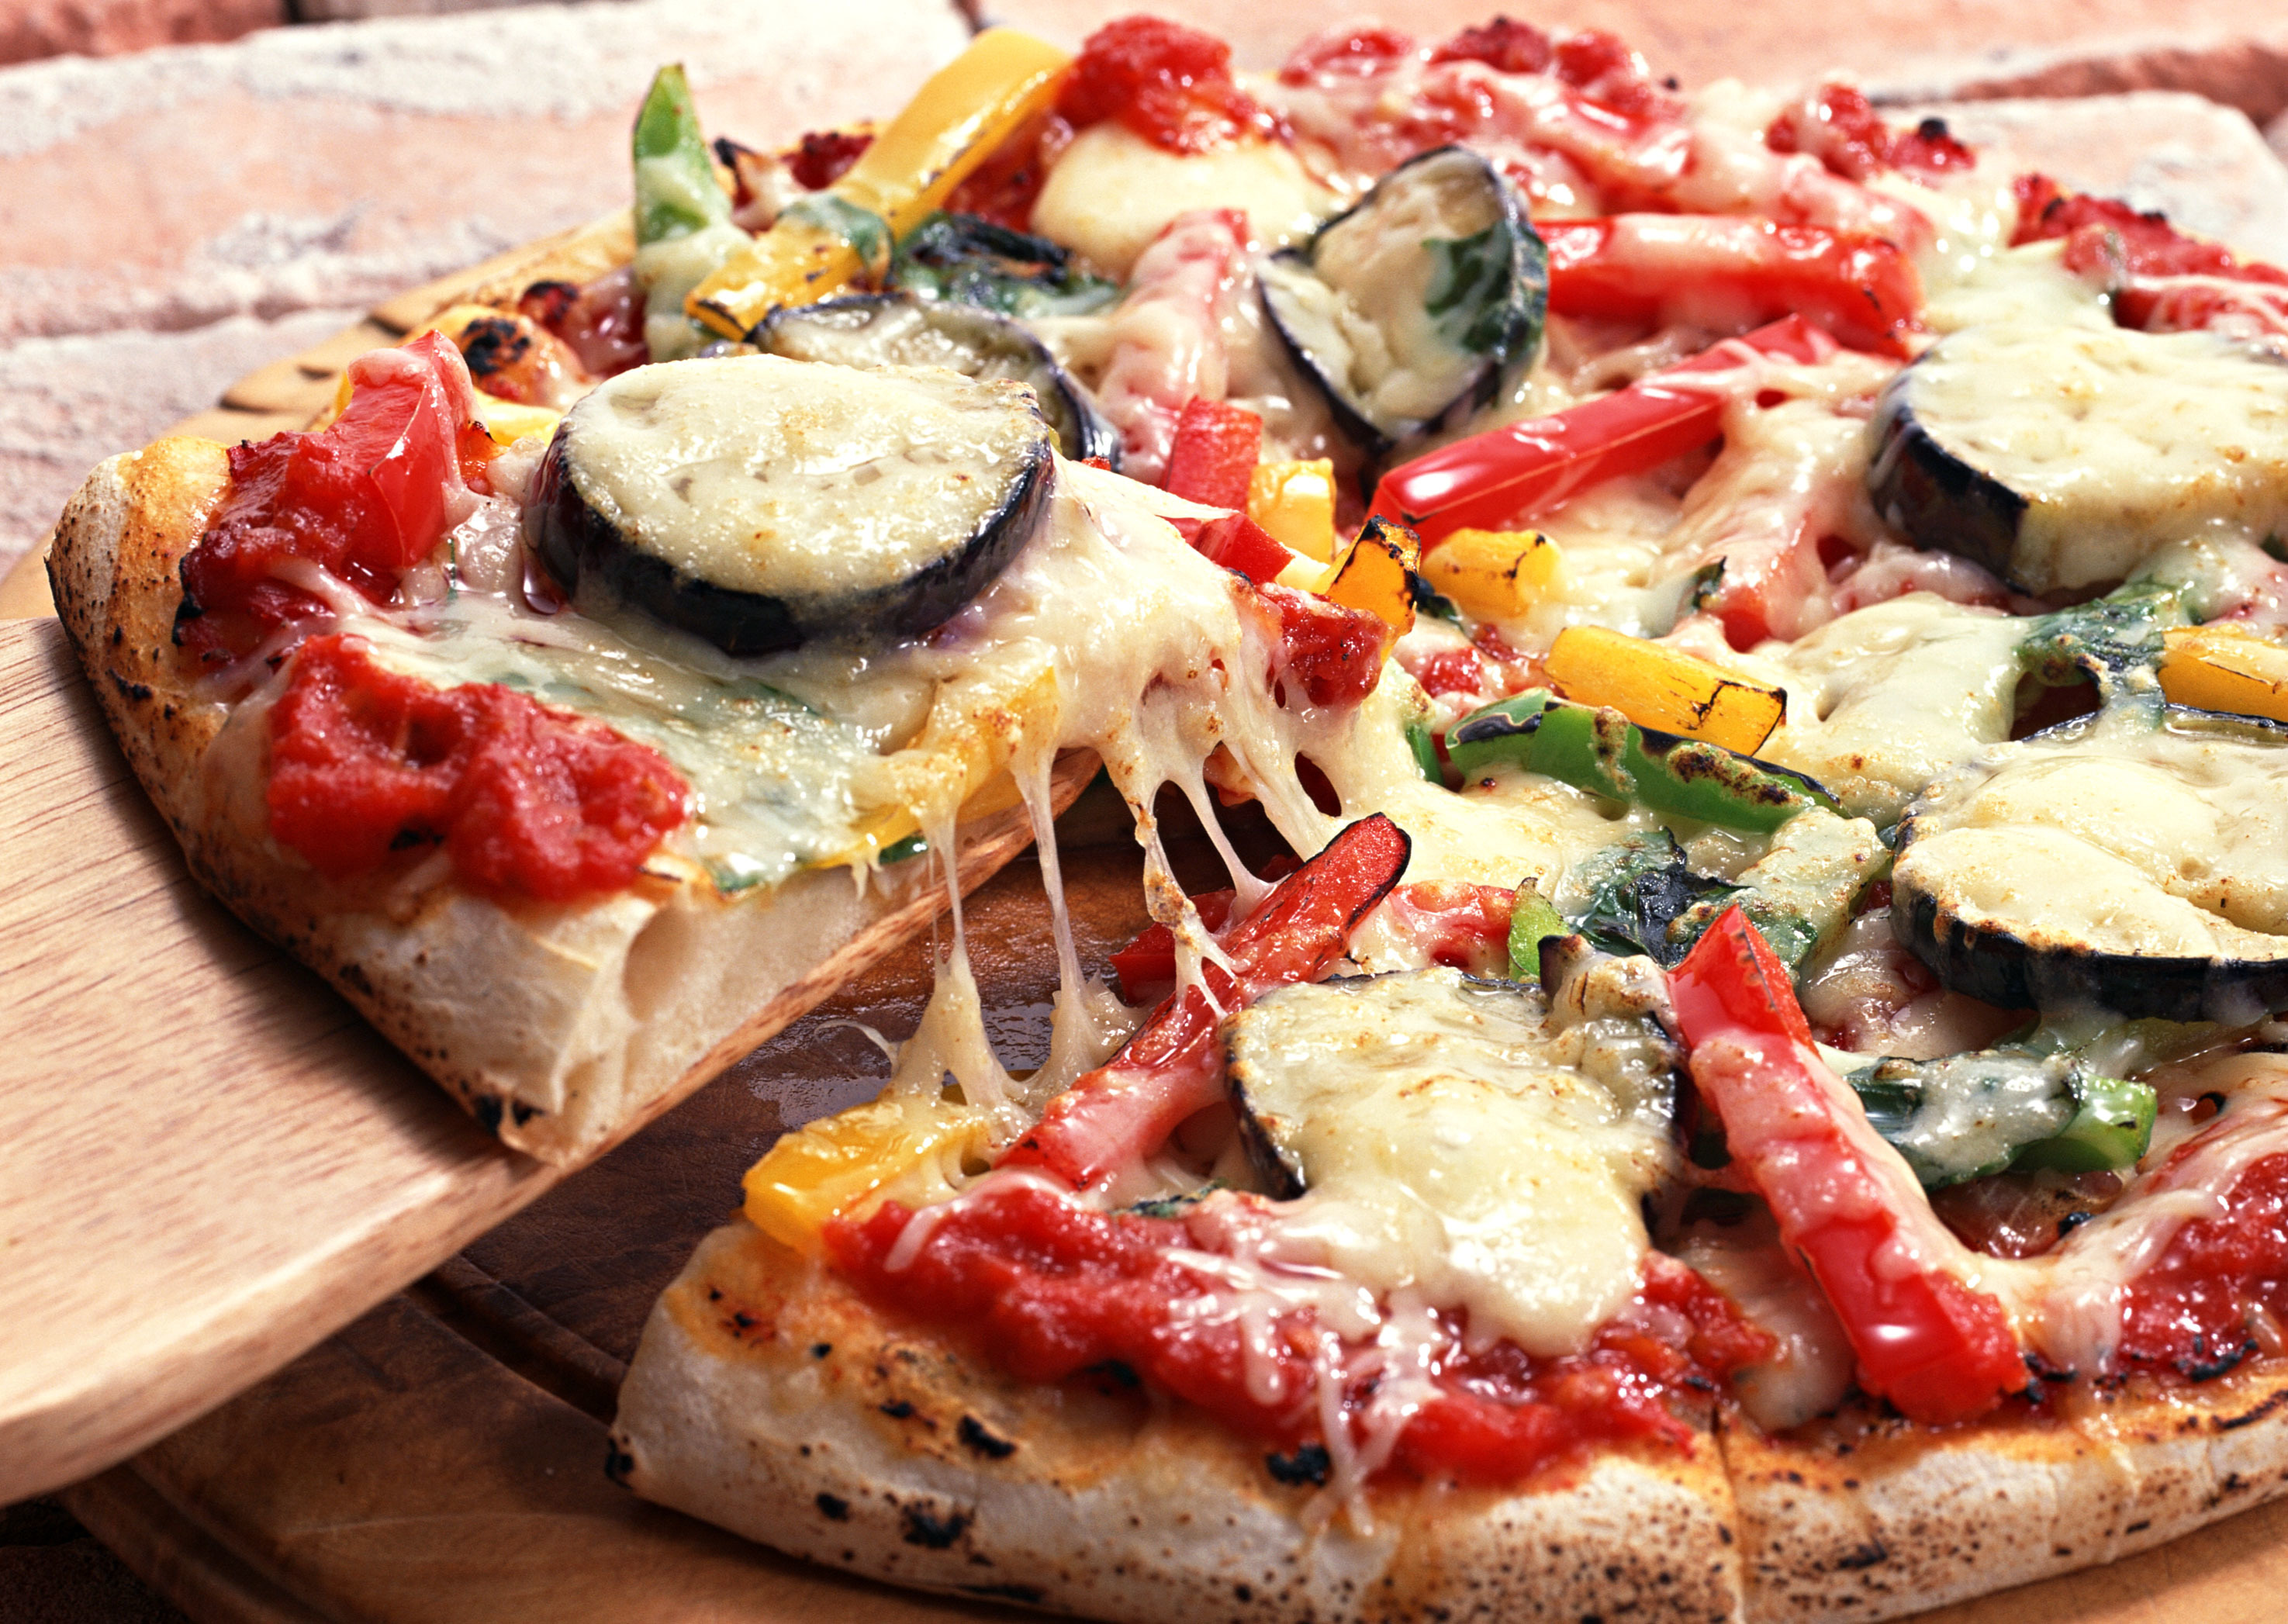 Mimi cica pizza. Итальянская кухня. Итальянская пицца. Итальянская кухня блюда. Традиционная итальянская кухня.